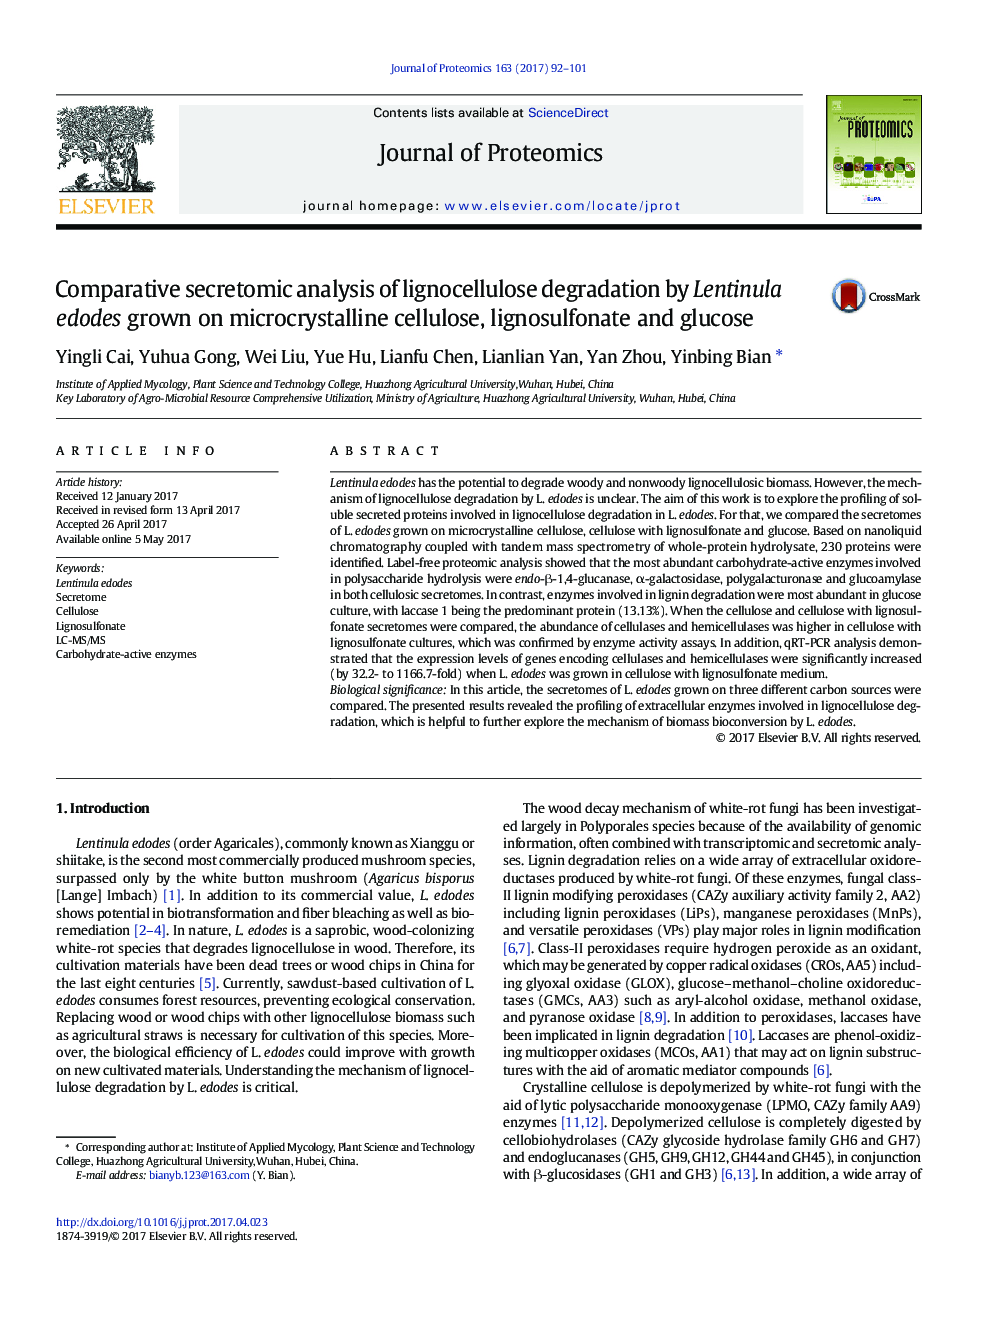 Comparative secretomic analysis of lignocellulose degradation by Lentinula edodes grown on microcrystalline cellulose, lignosulfonate and glucose